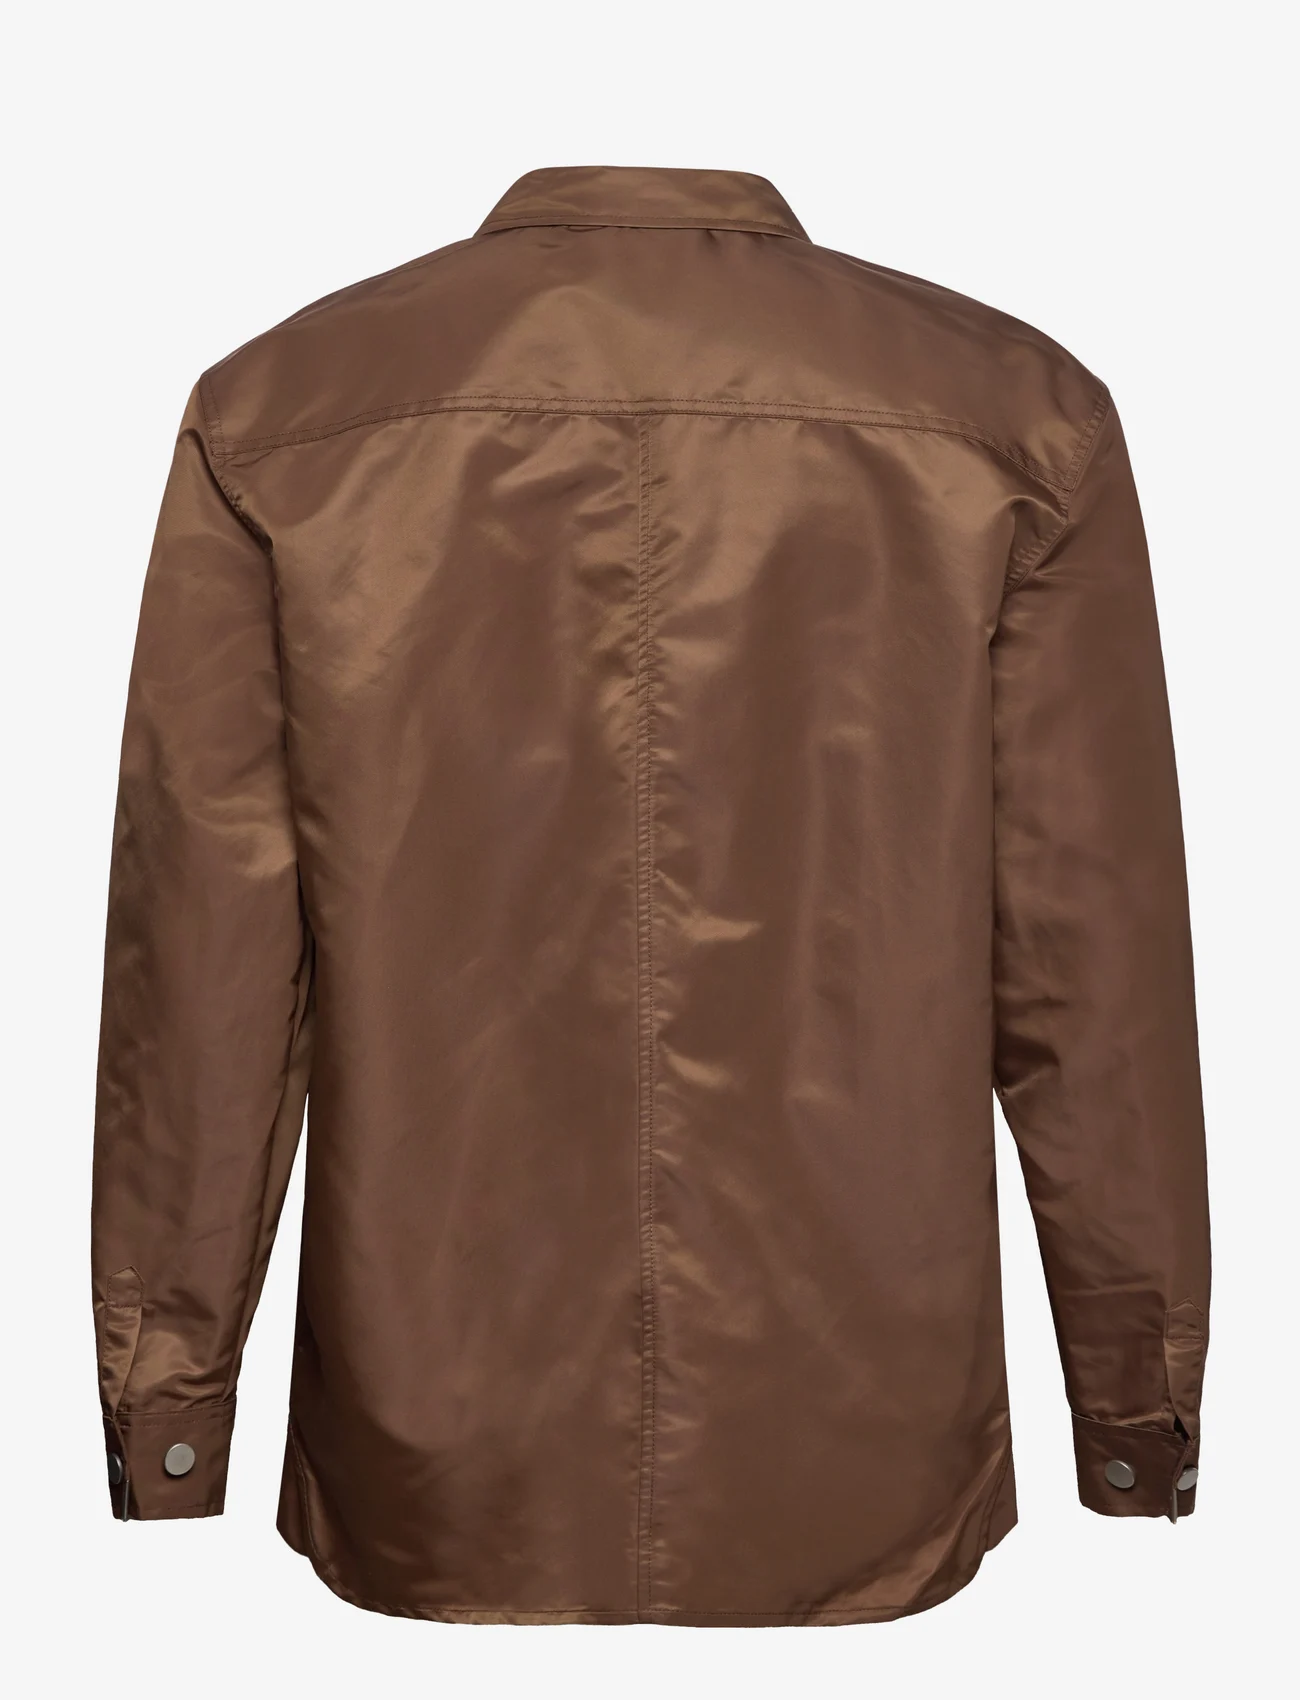 HAN Kjøbenhavn - Army Shirt - mehed - brown - 1